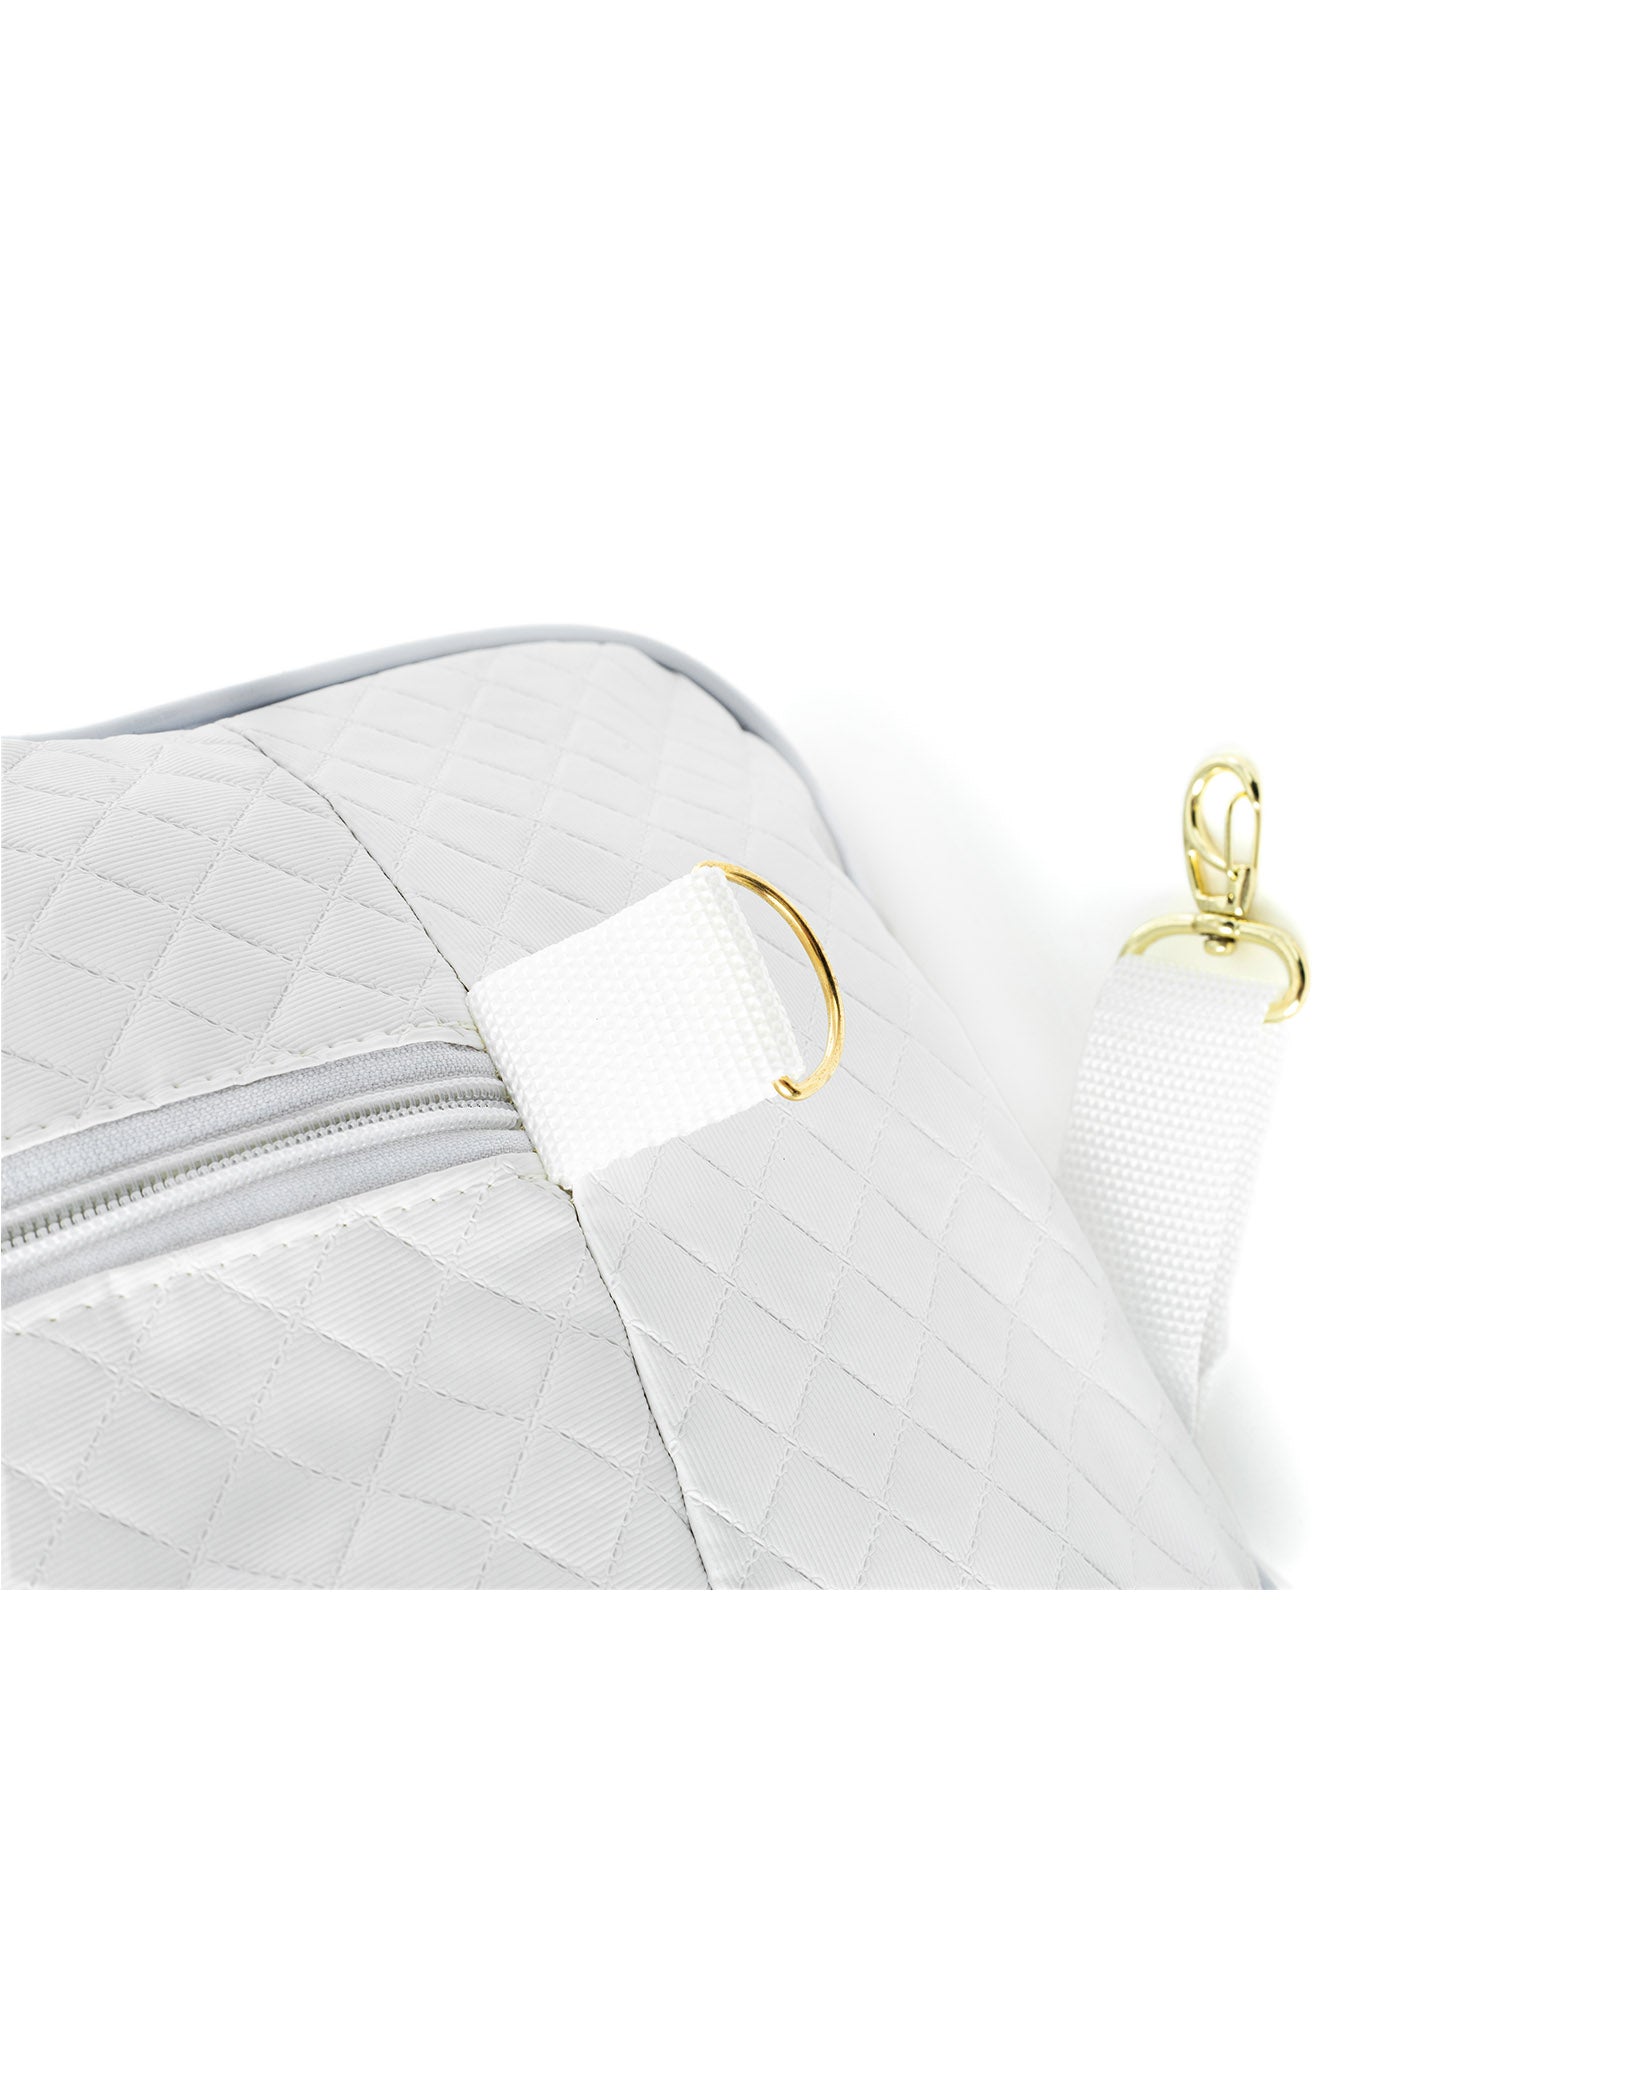 Vestem - Hand Bag Iconic Mameshsse White - BOL14.C0001